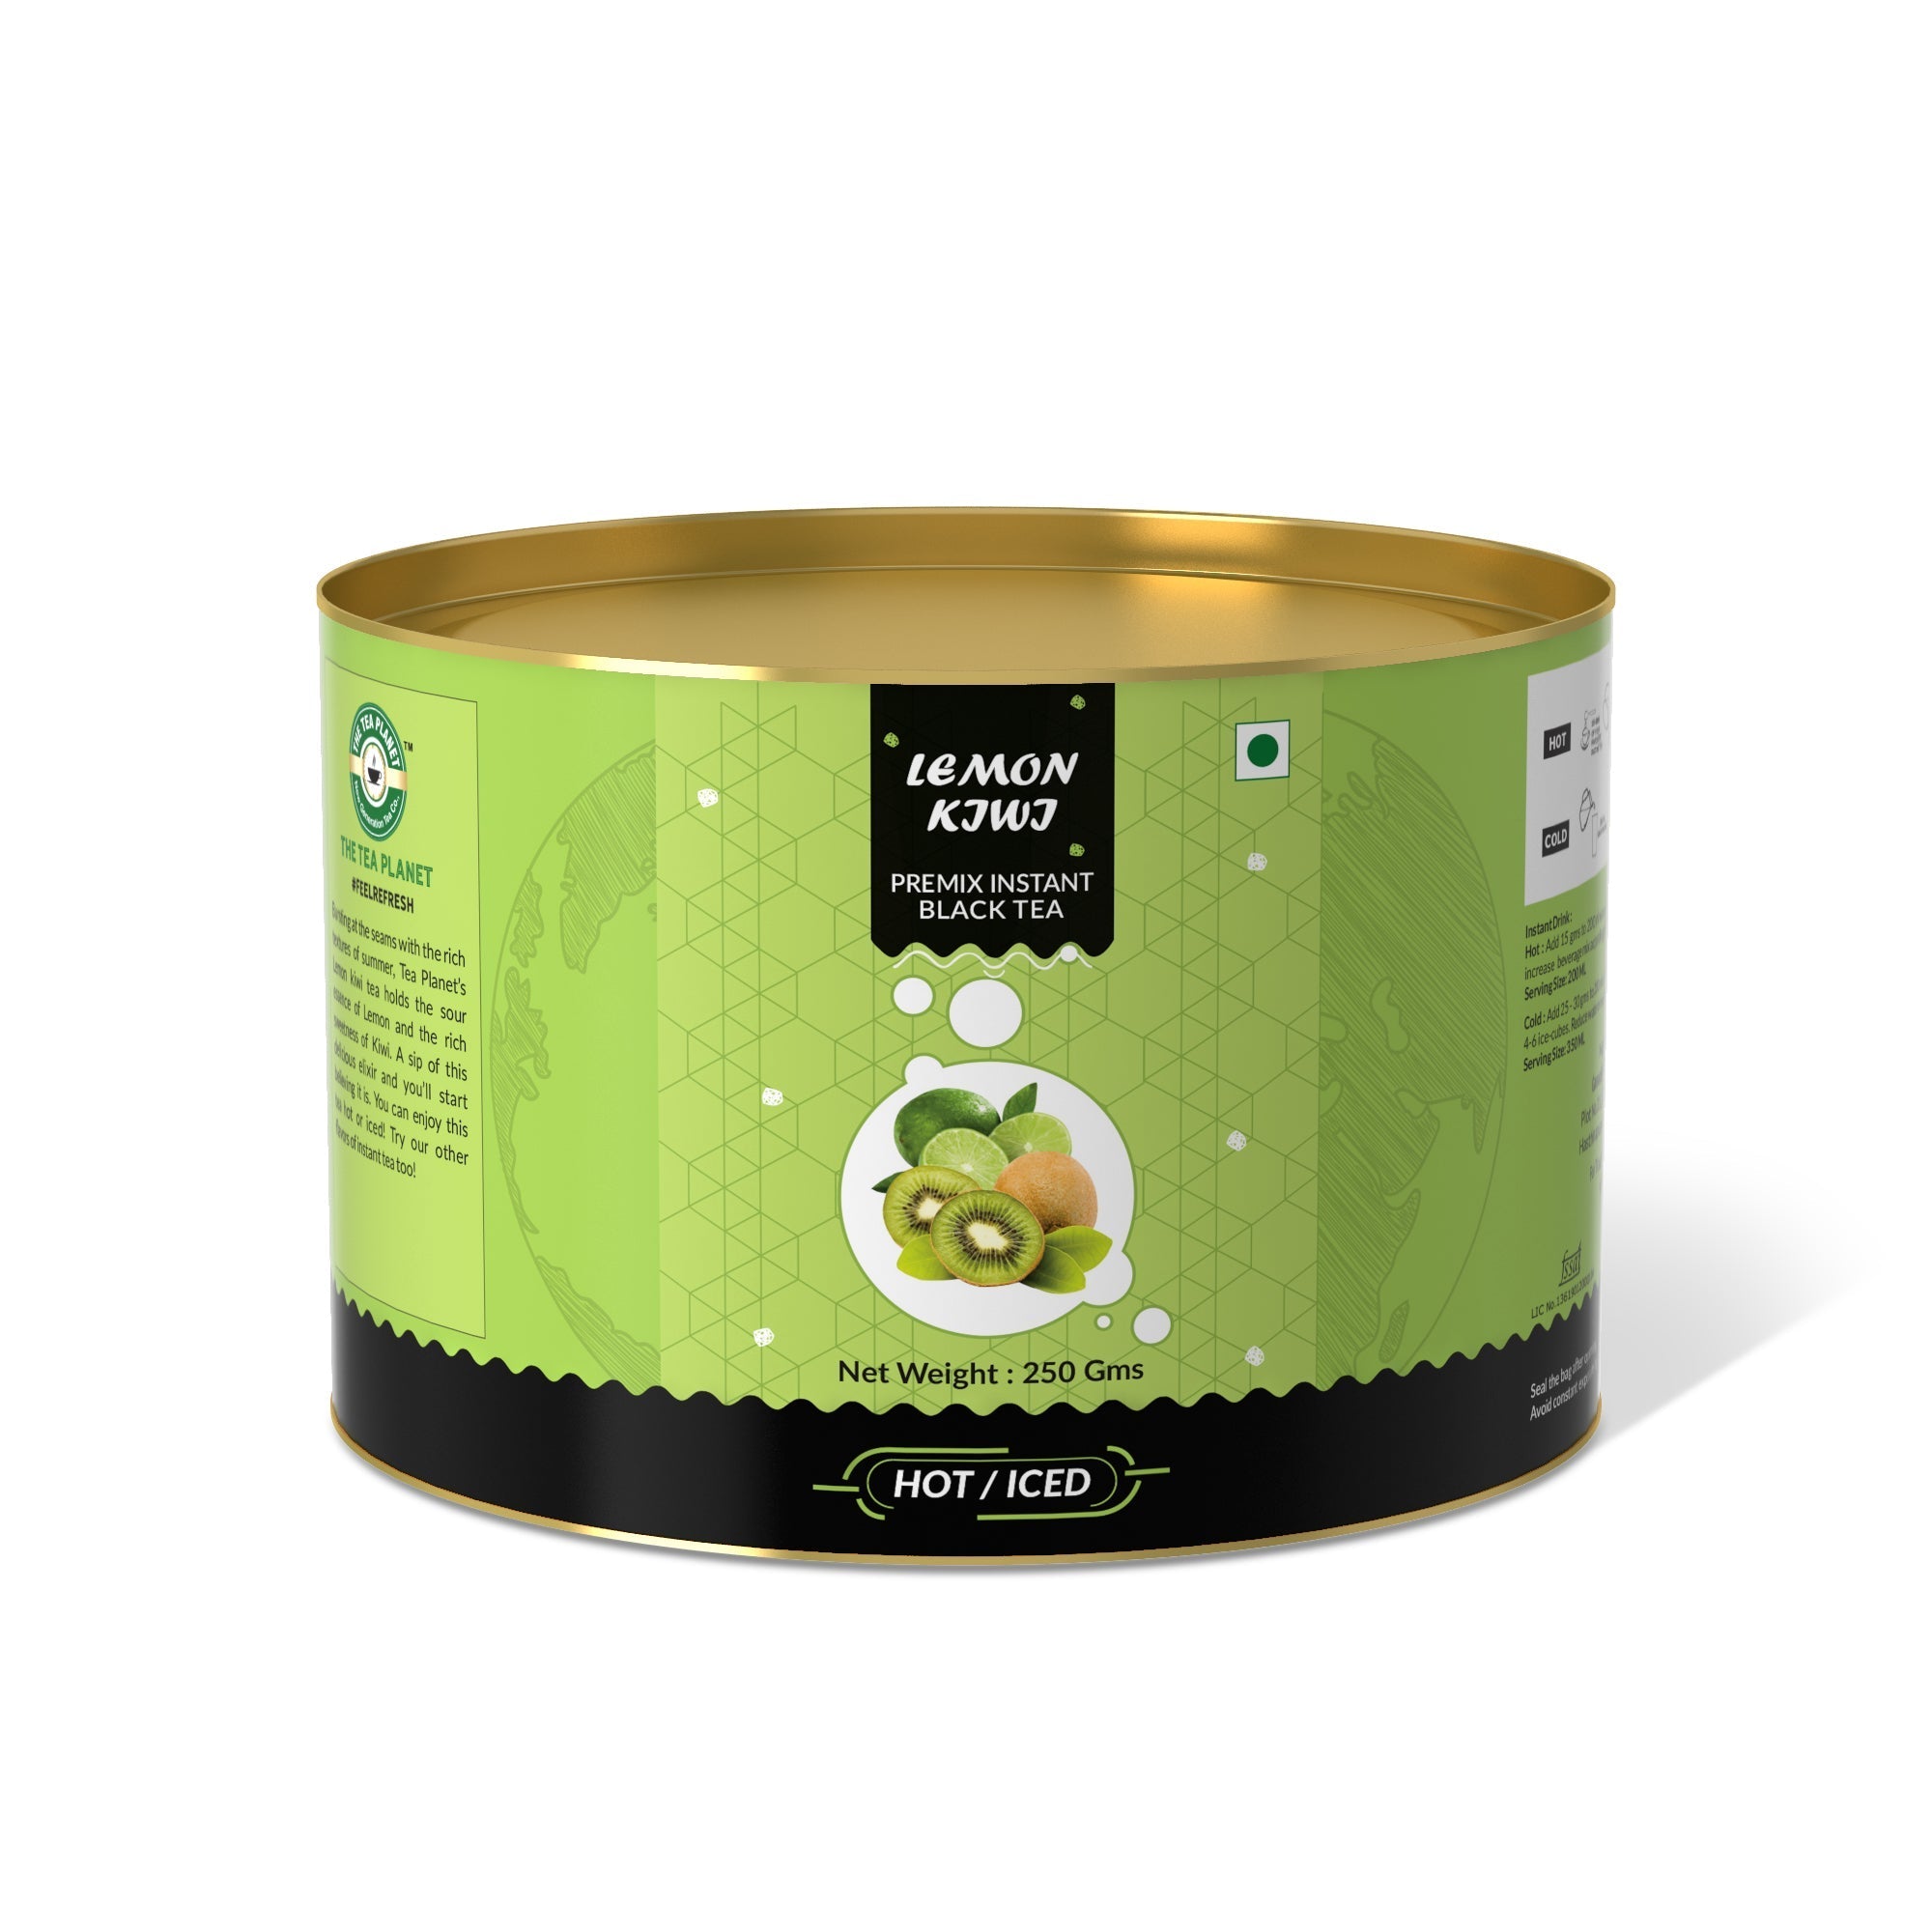 Lemon Kiwi Flavored Instant Black Tea - 400 gms